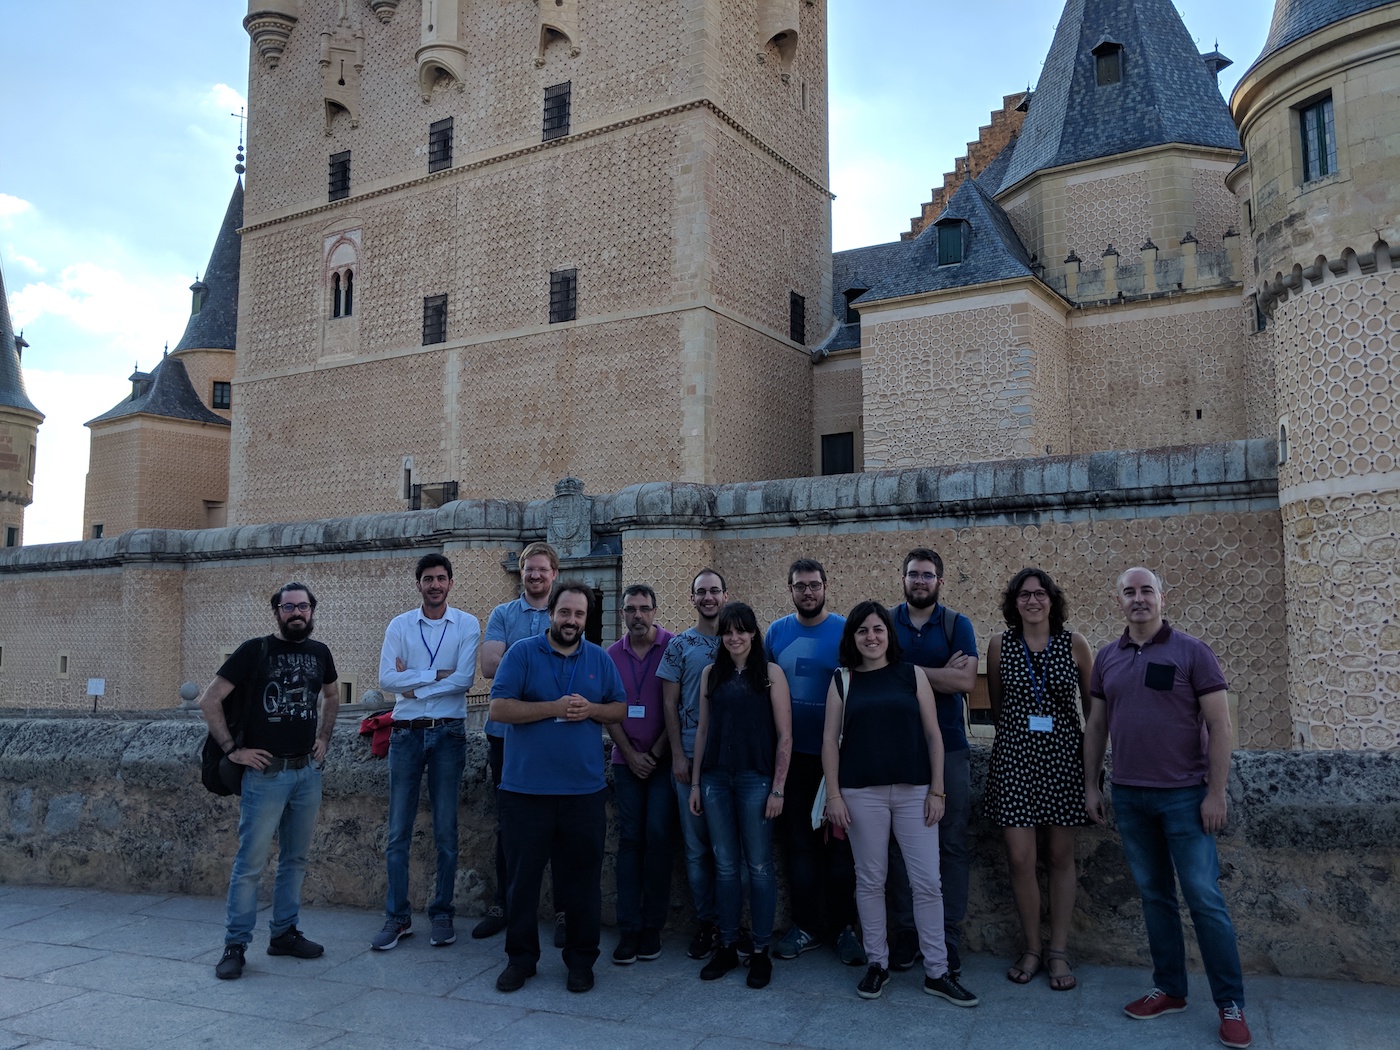 Some
participants from the Universidad Autónoma de Madrid in front of the Alcázar de
Segovia.